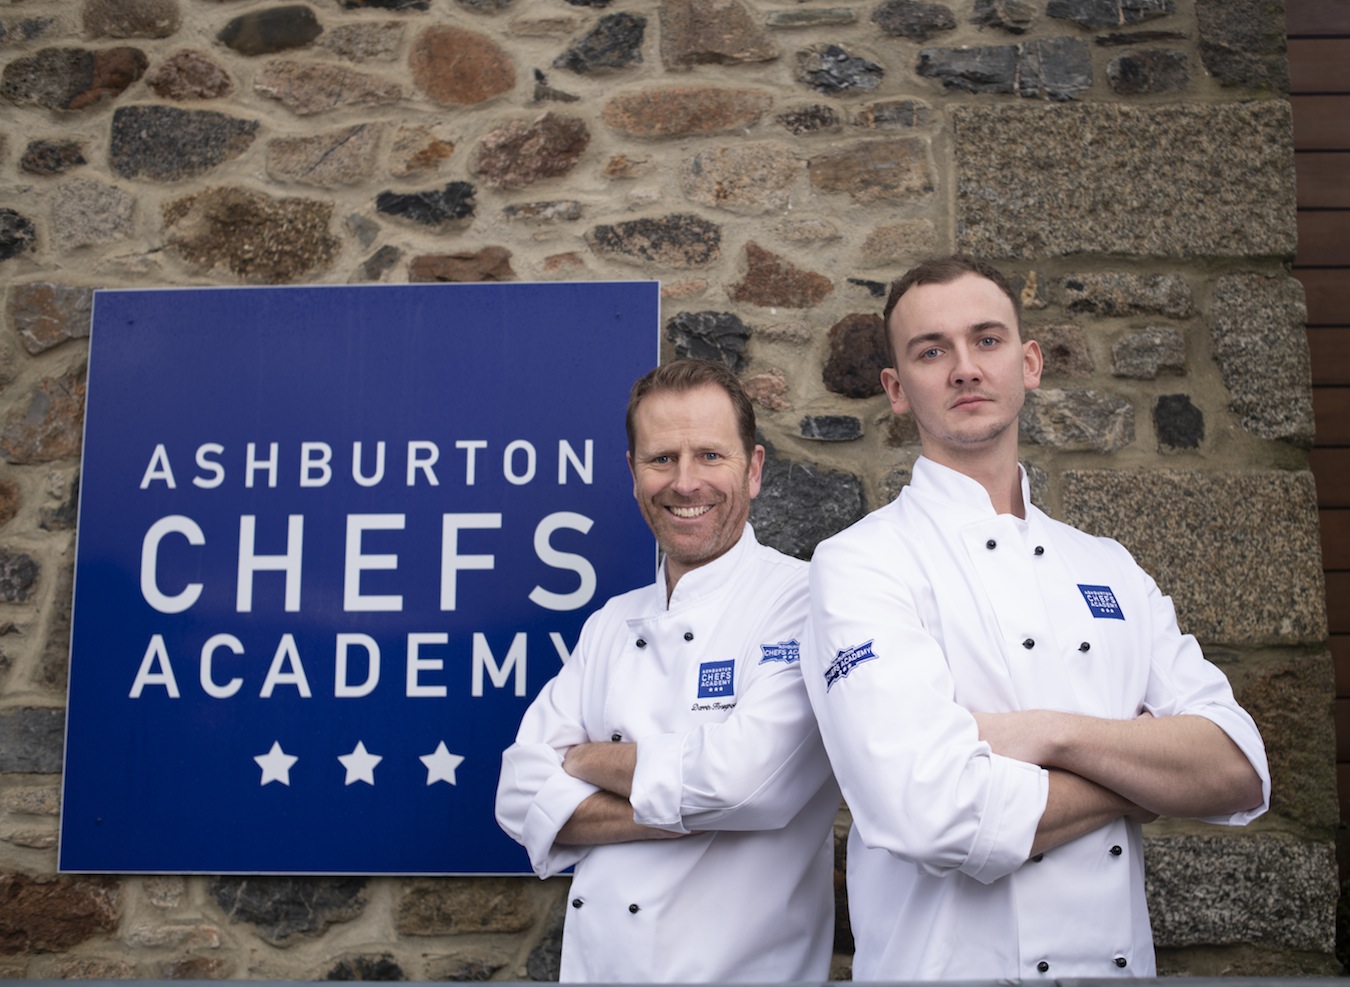 Masterchef Champion returns to Ashburton Chefs Academy